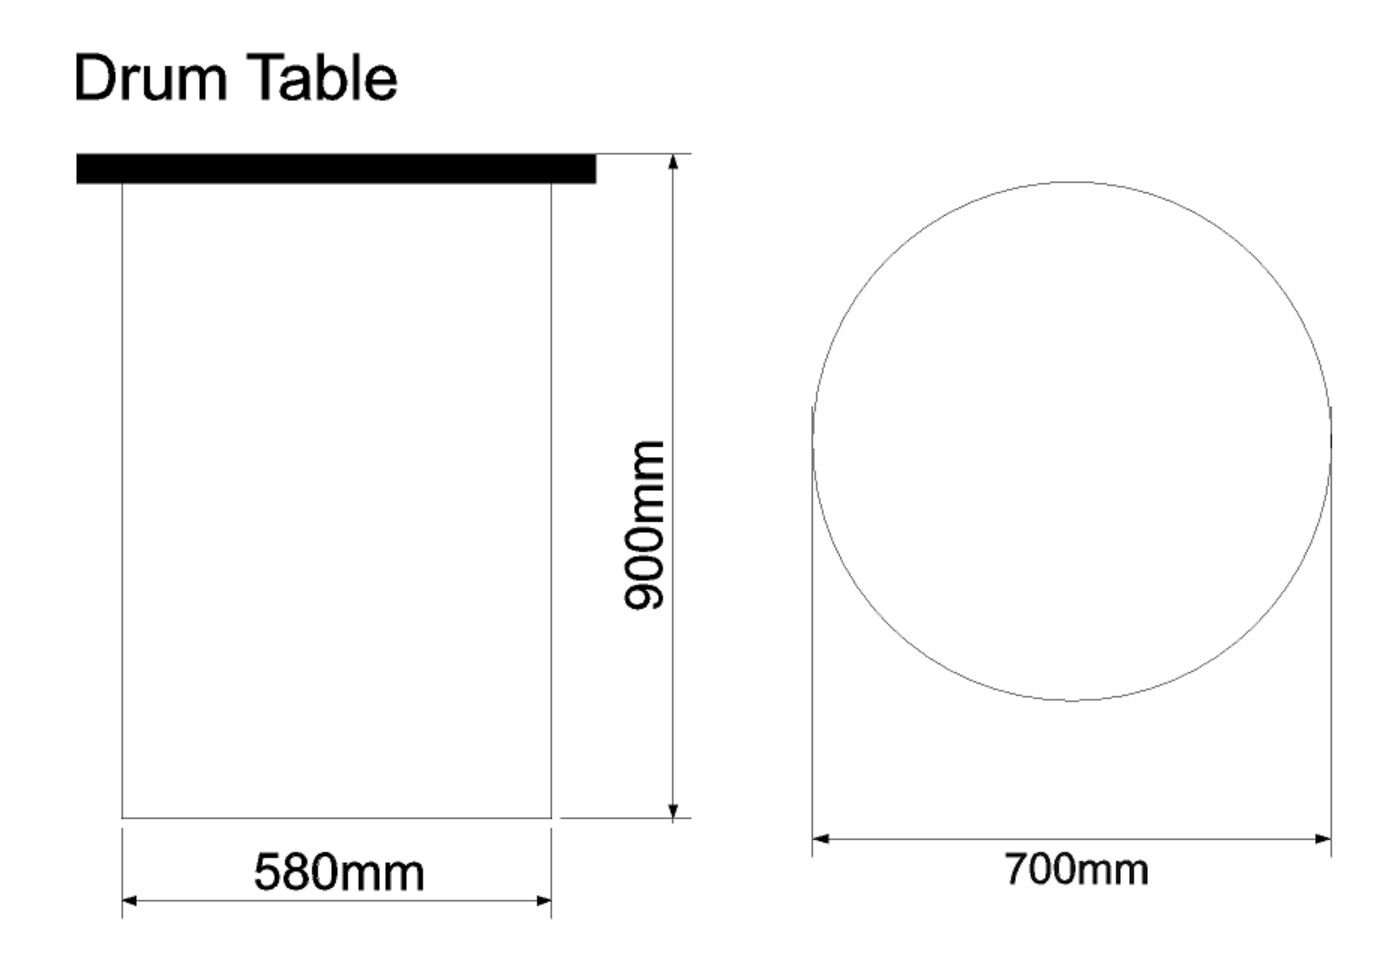 Drum Table Dimensions